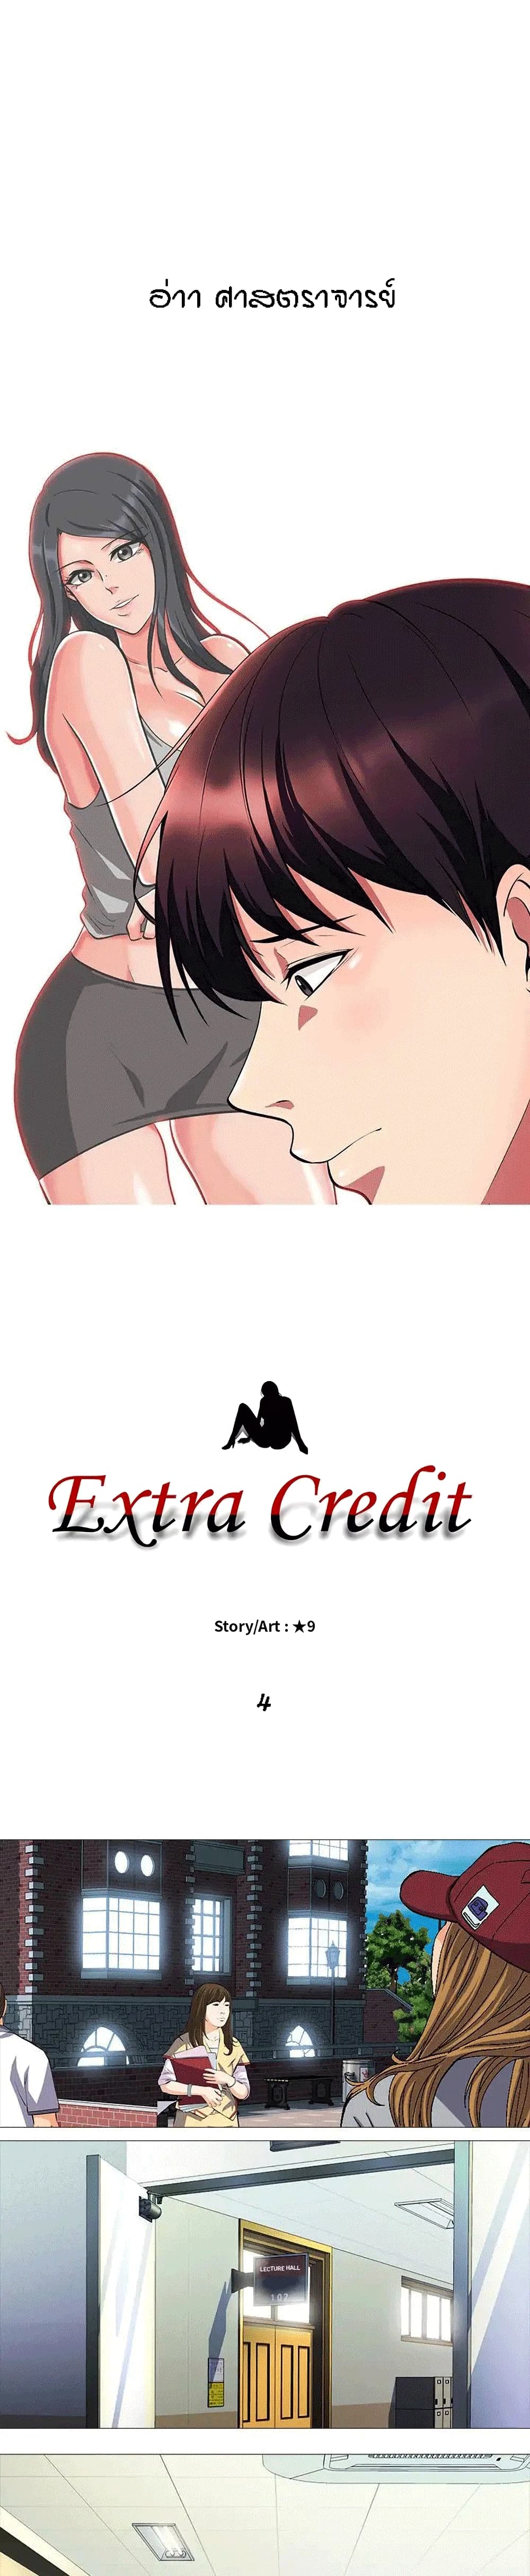 Extra Credit 4-4